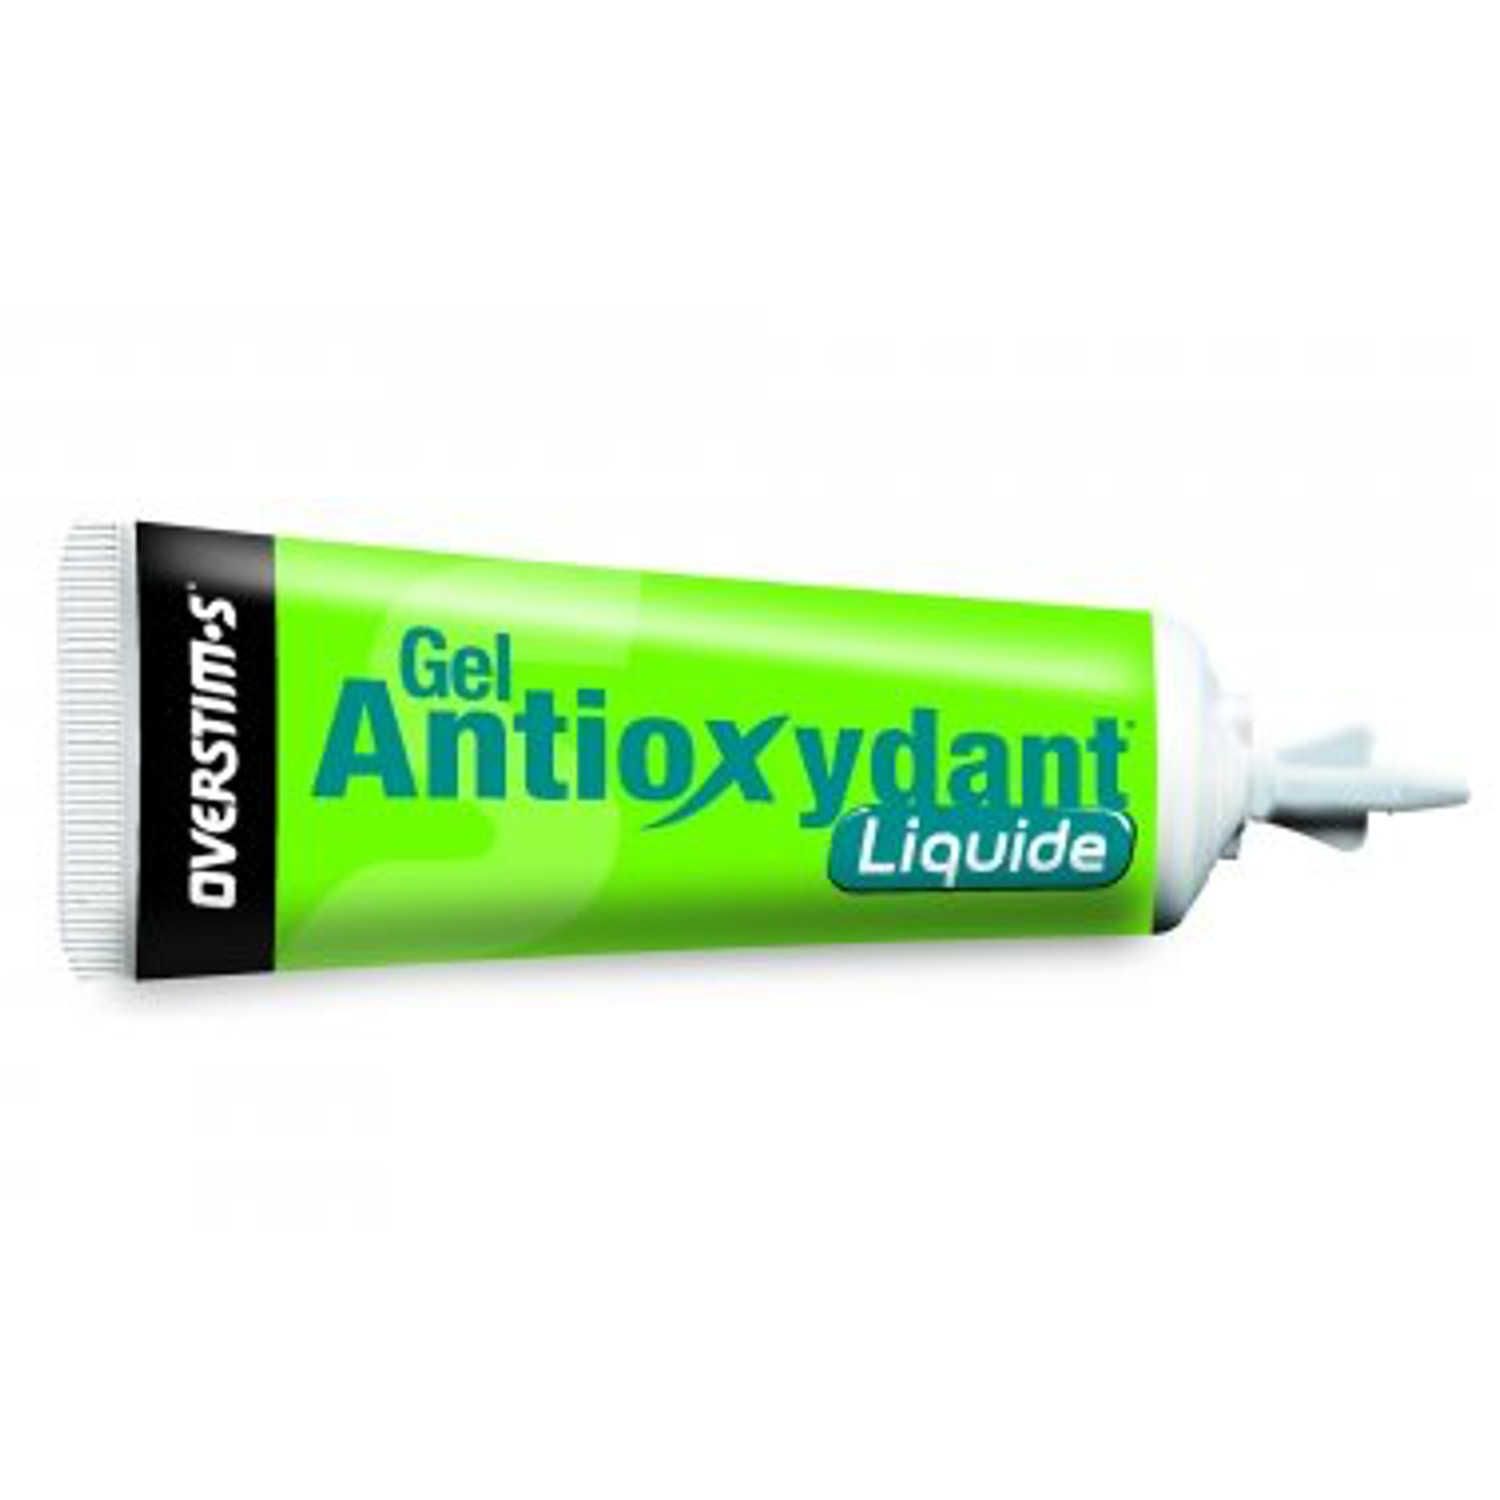 Gel Antioxydant Liquide 